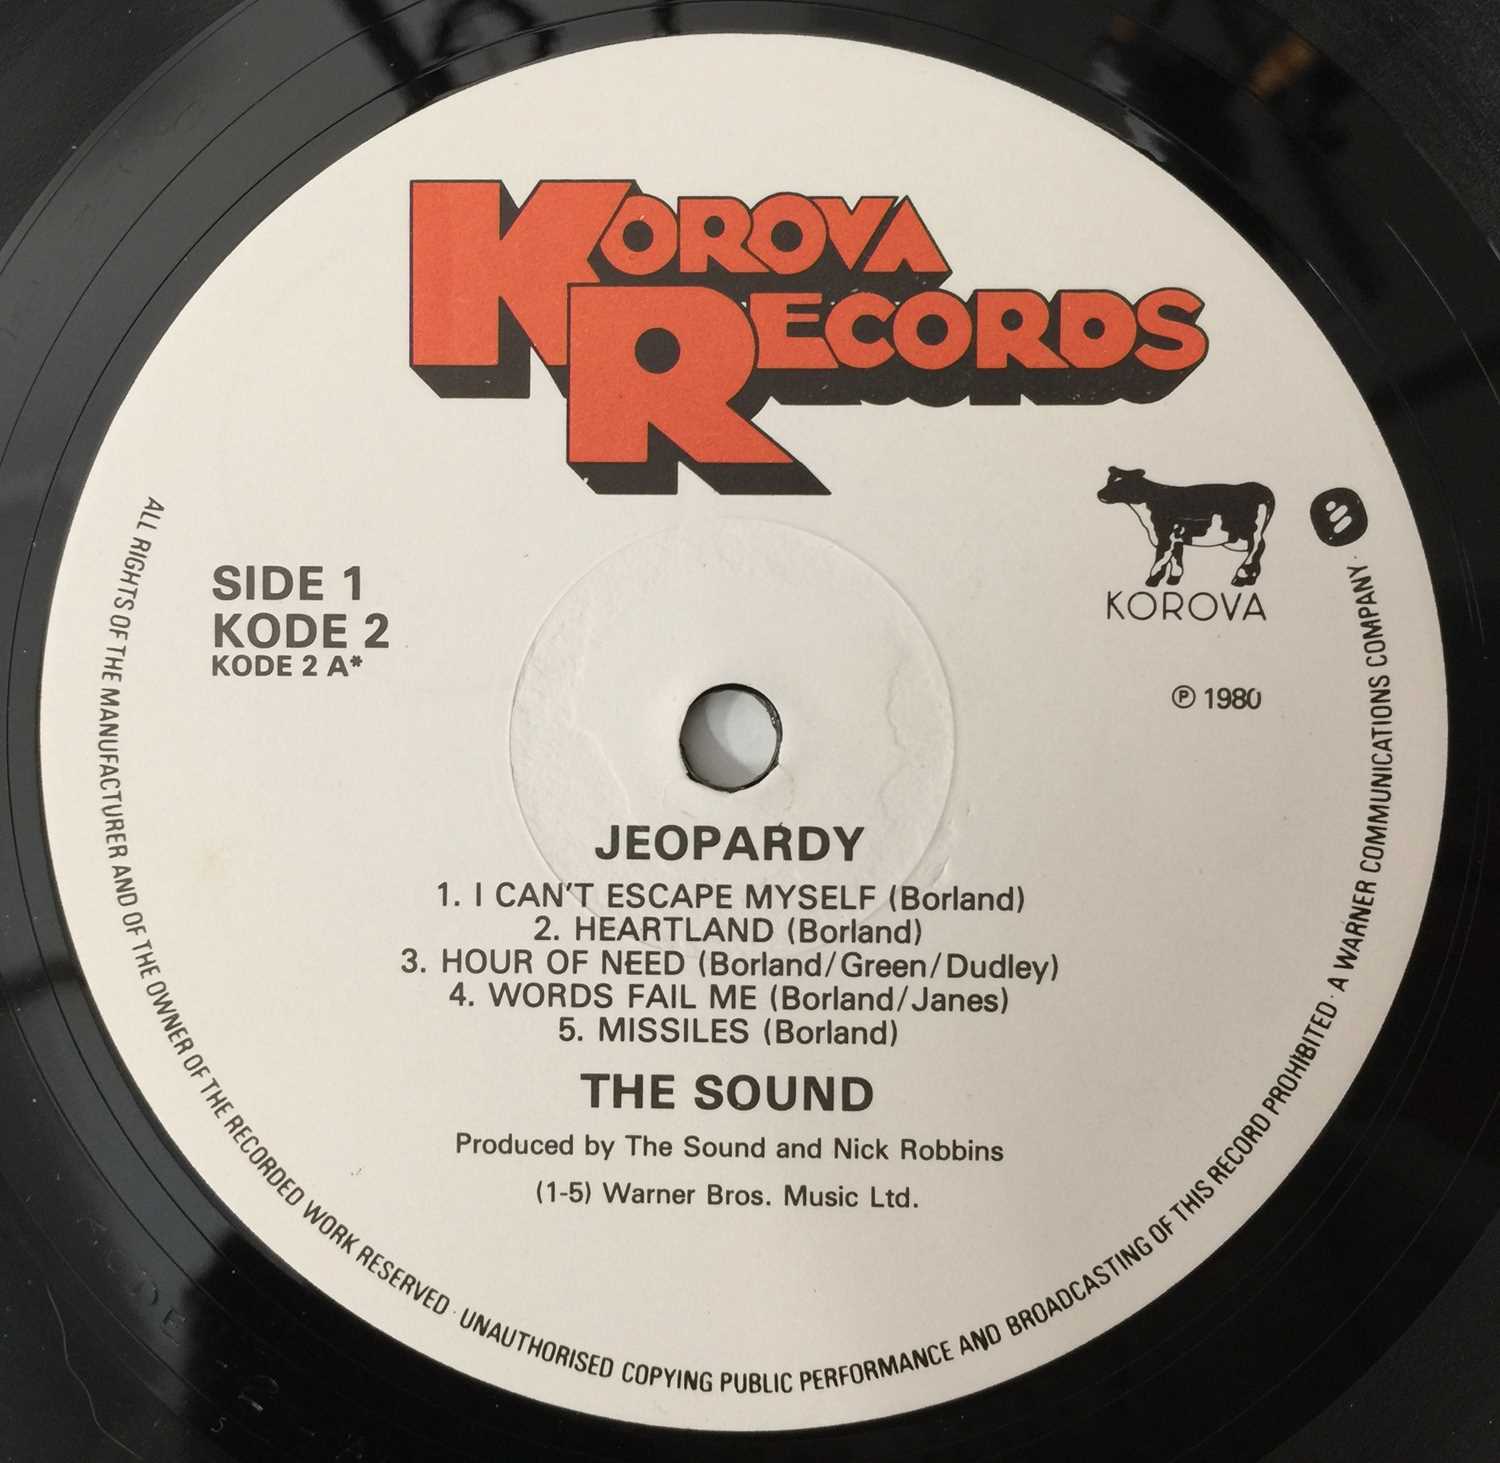 THE SOUND - JEOPARDY LP (ORIGINAL UK RELEASE - KOROVA KODE 2) - Image 4 of 5